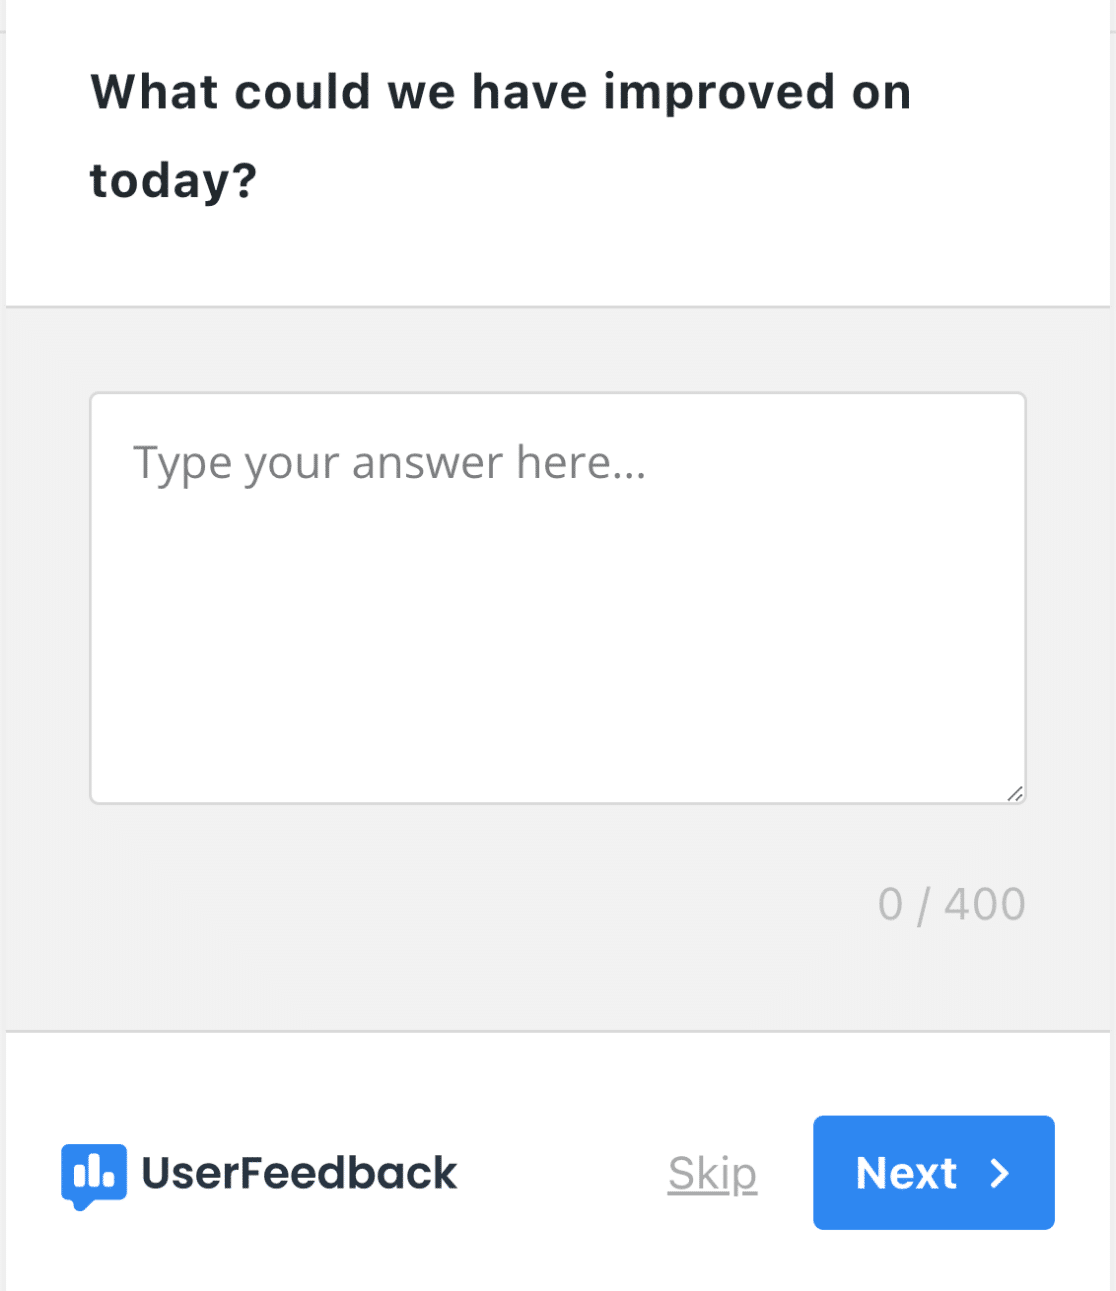 UserFeedback customer satisfaction survey template - long answer